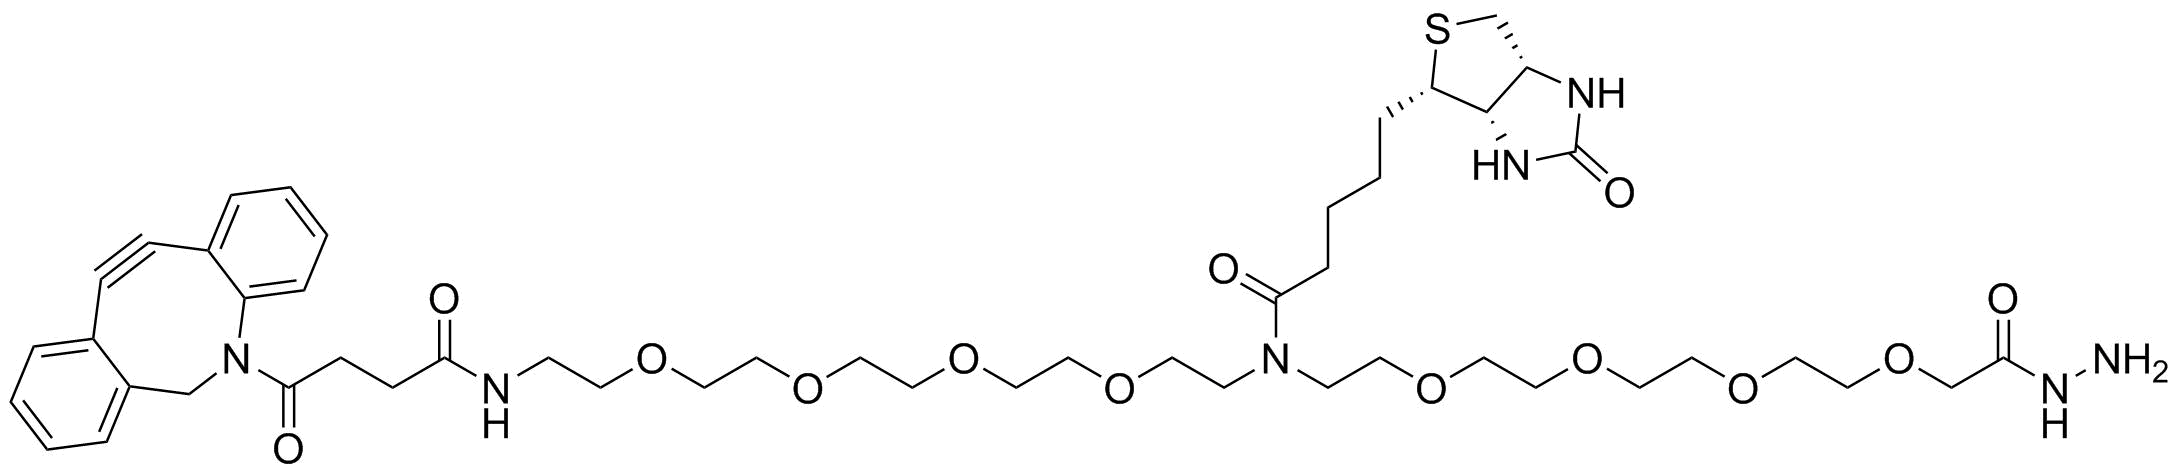 N-(DBCO-PEG4)-N-Biotin-PEG4-hydrazide TFA salt